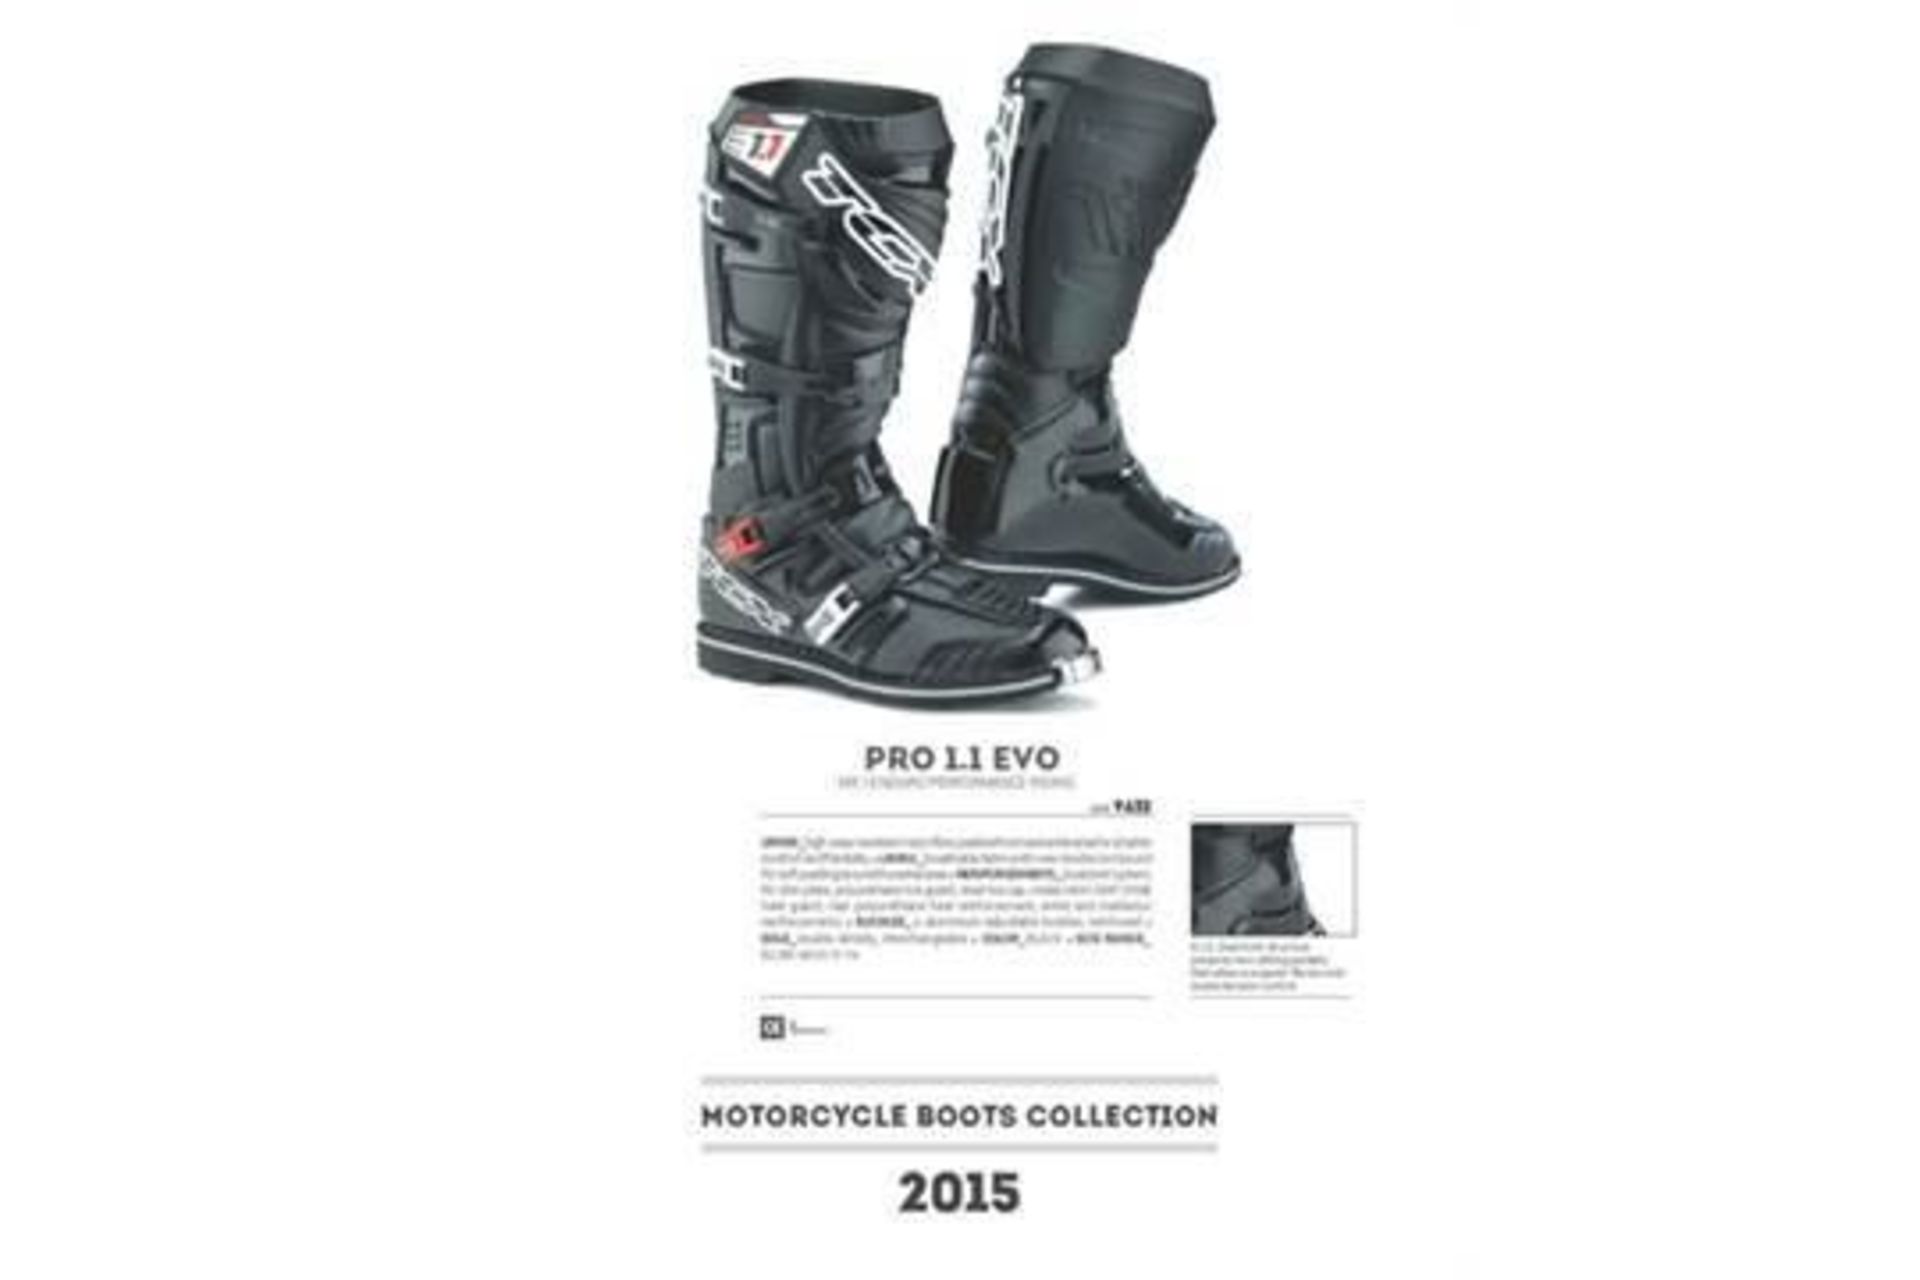 TCX Pro 1.1 Evo Motocross Boots - Image 5 of 5